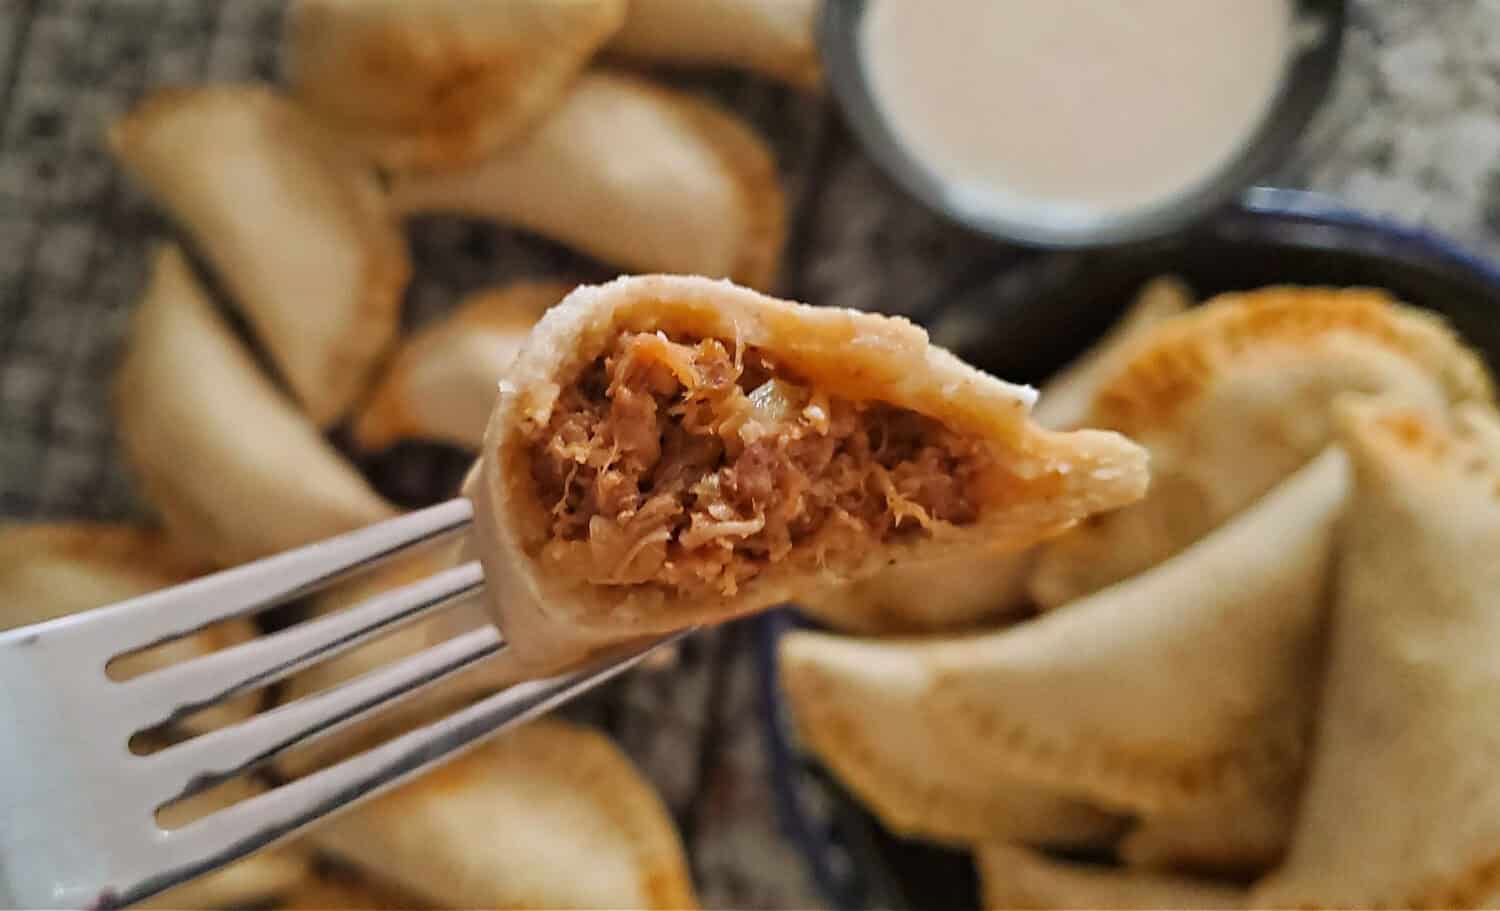 Savory Empanadas: Shredded pork & chorizo, garlic, onions and seasonings. Great for snacks, dinner, game day or any Mexicana feast!